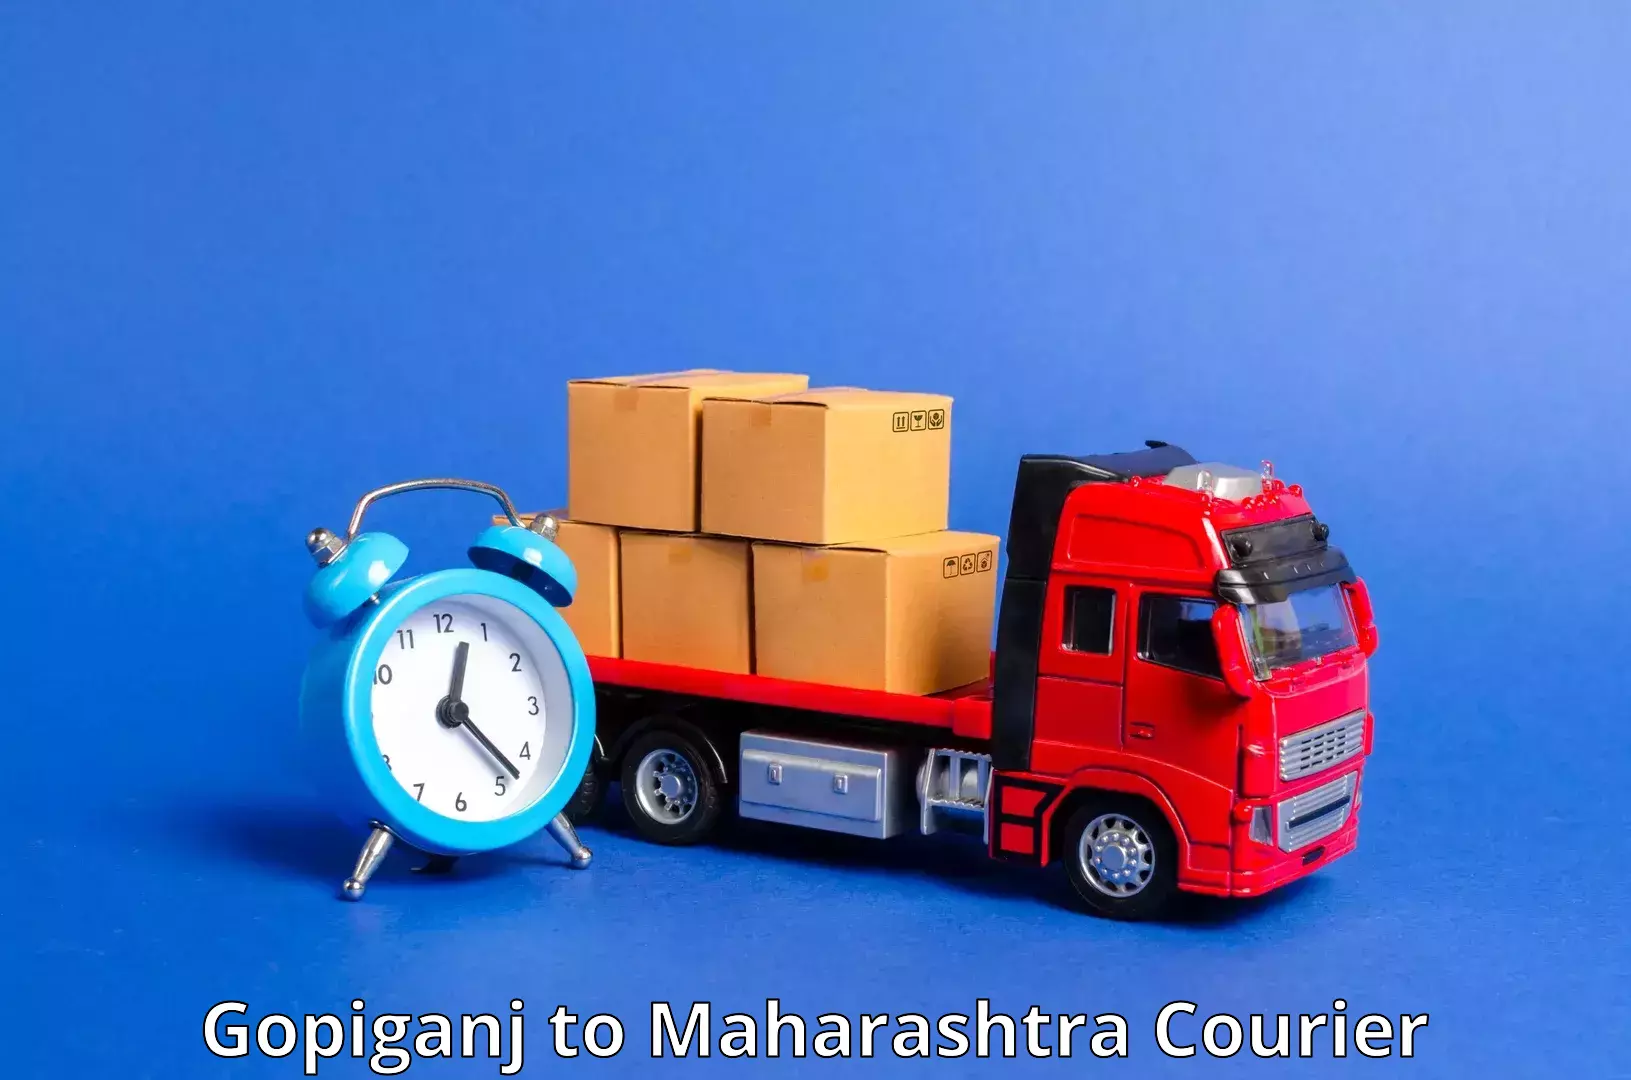 Multi-national courier services Gopiganj to Ojhar